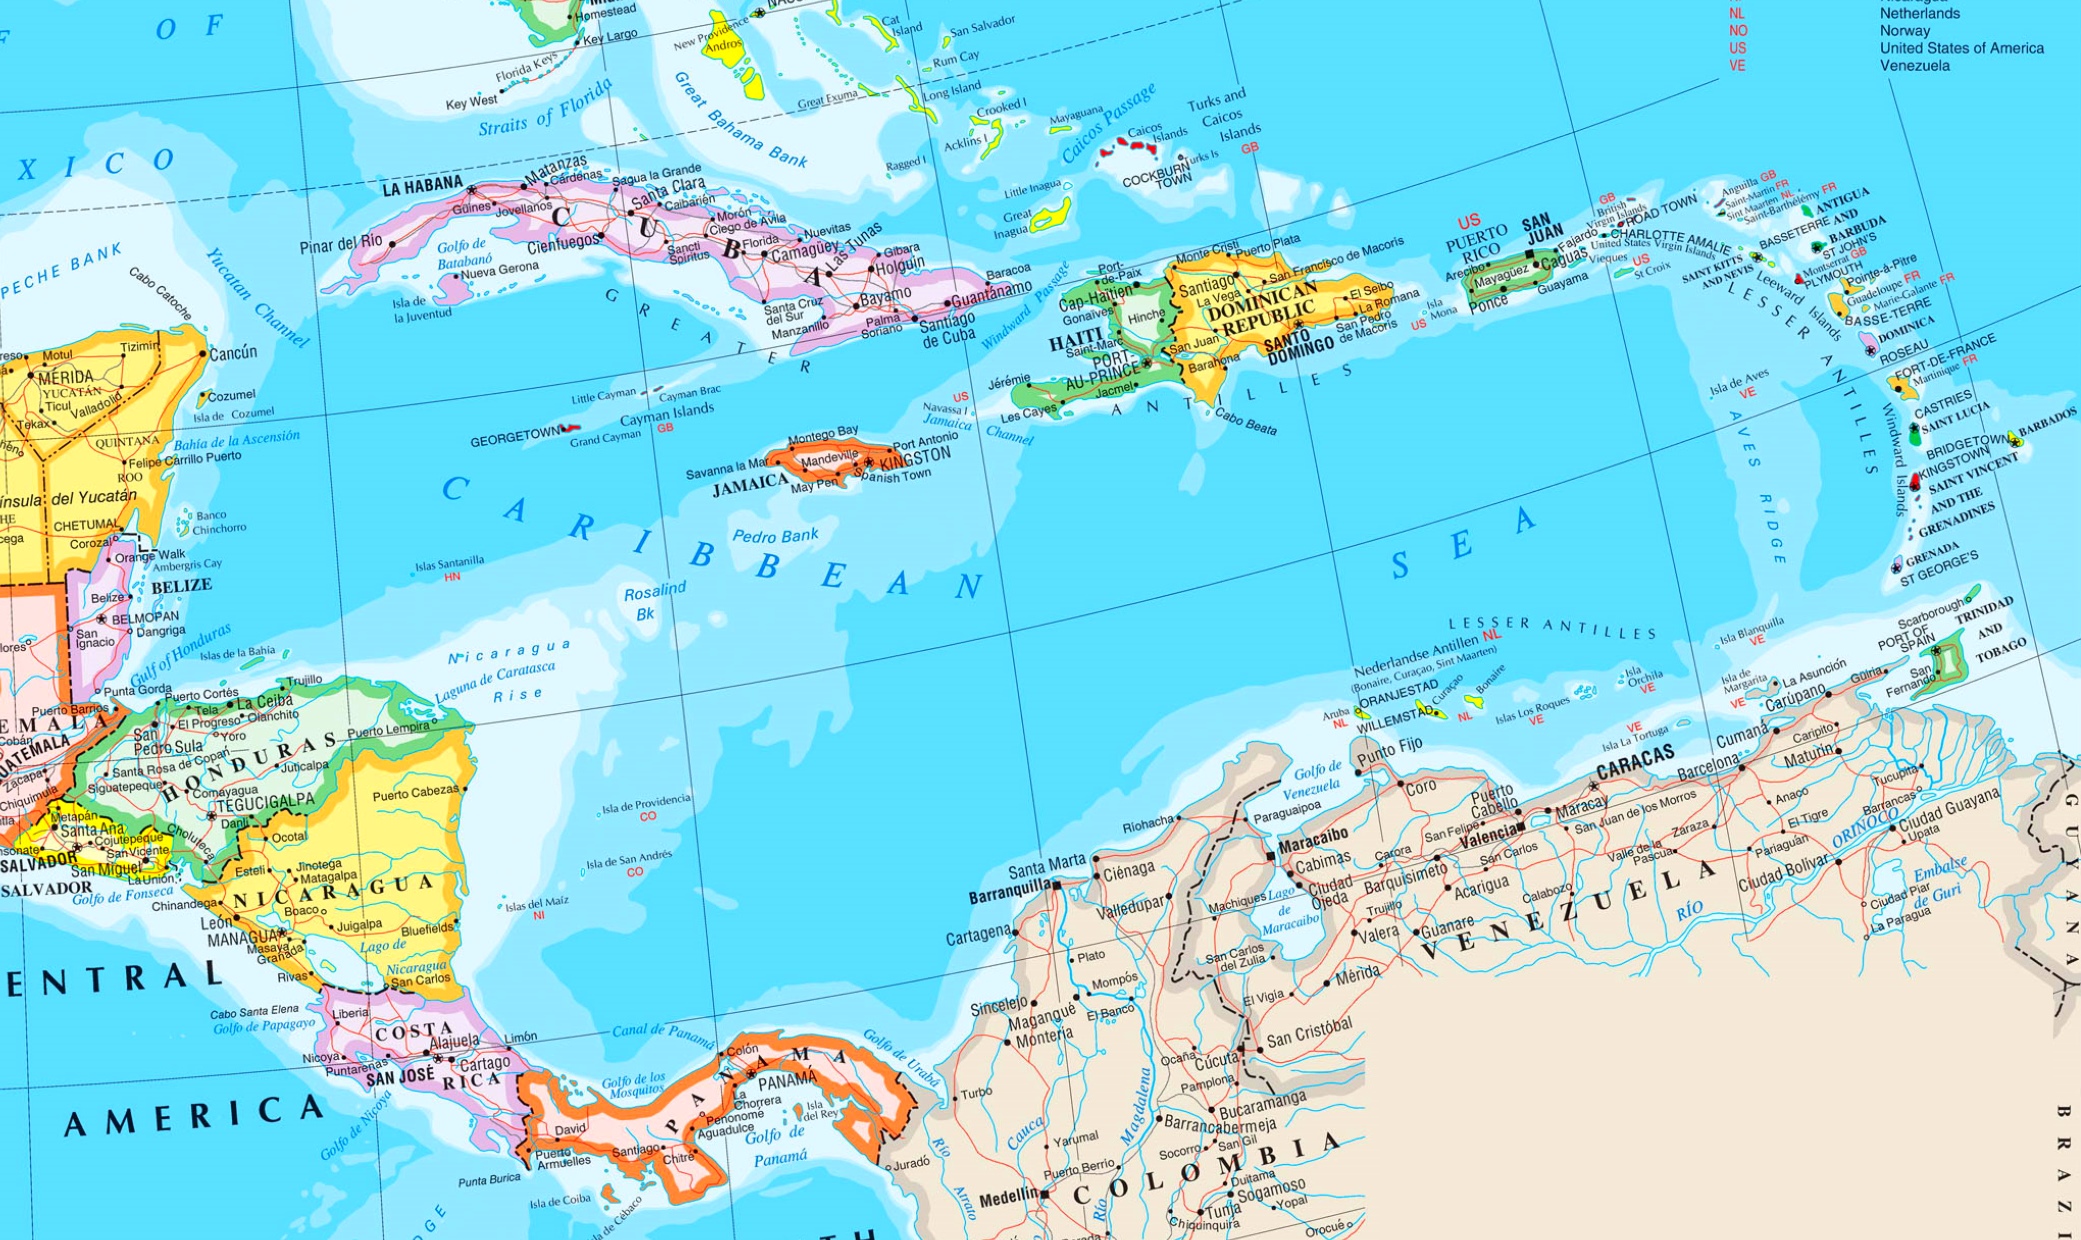 Caribbean Sea On World Map